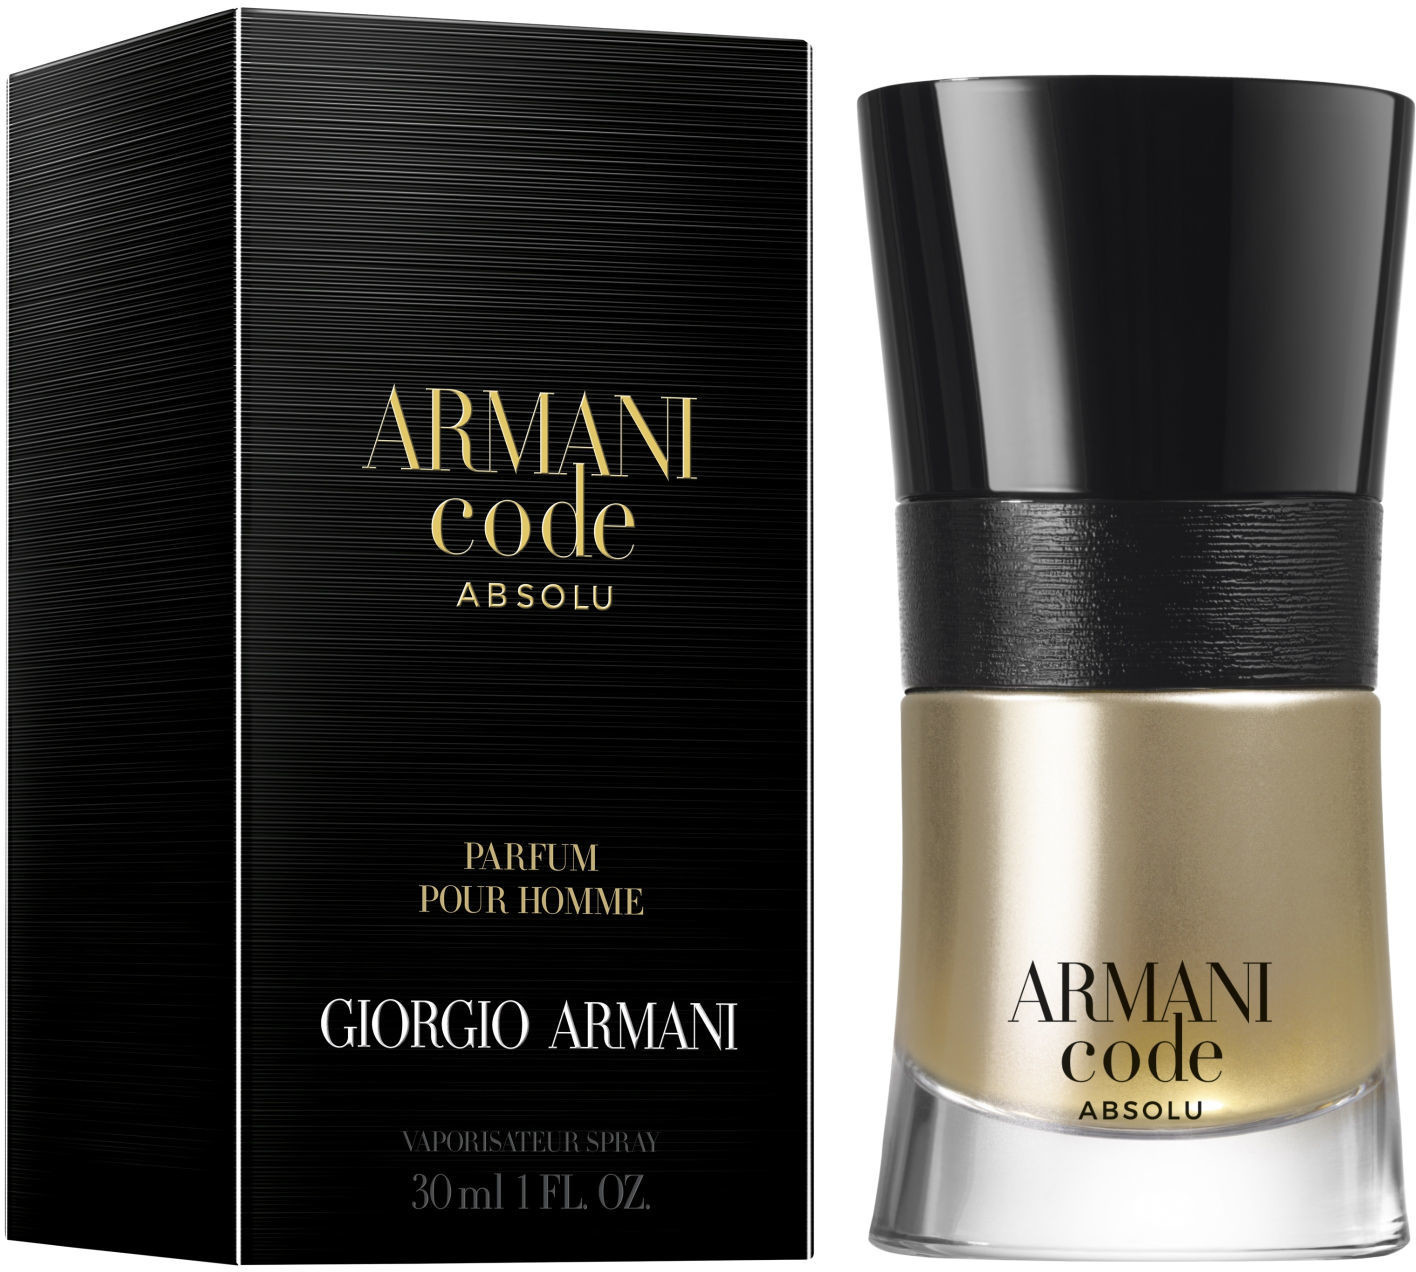 Code homme. Giorgio Armani code Absolu men 30ml. Giorgio Armani code homme EDP. Armani code Parfum мужской. Giorgio Armani code Absolu 110.